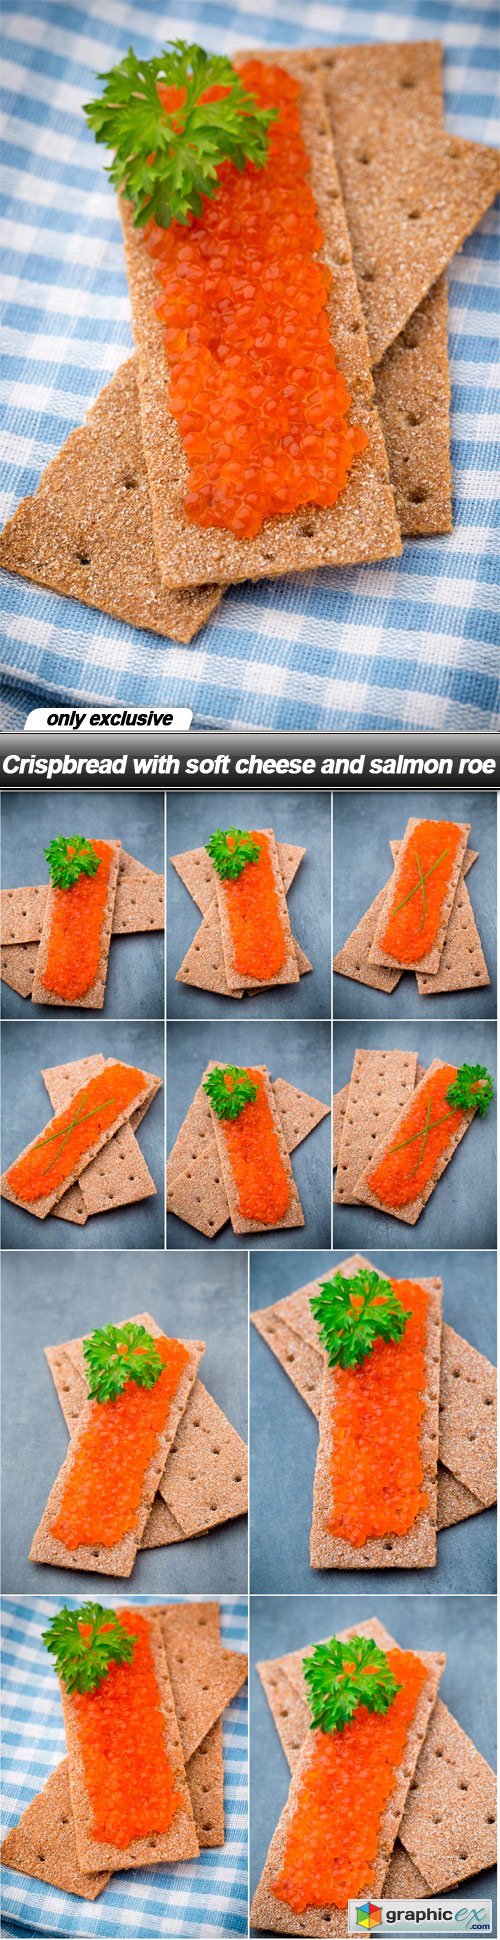 Crispbread with soft cheese and salmon roe - 10 UHQ JPEG